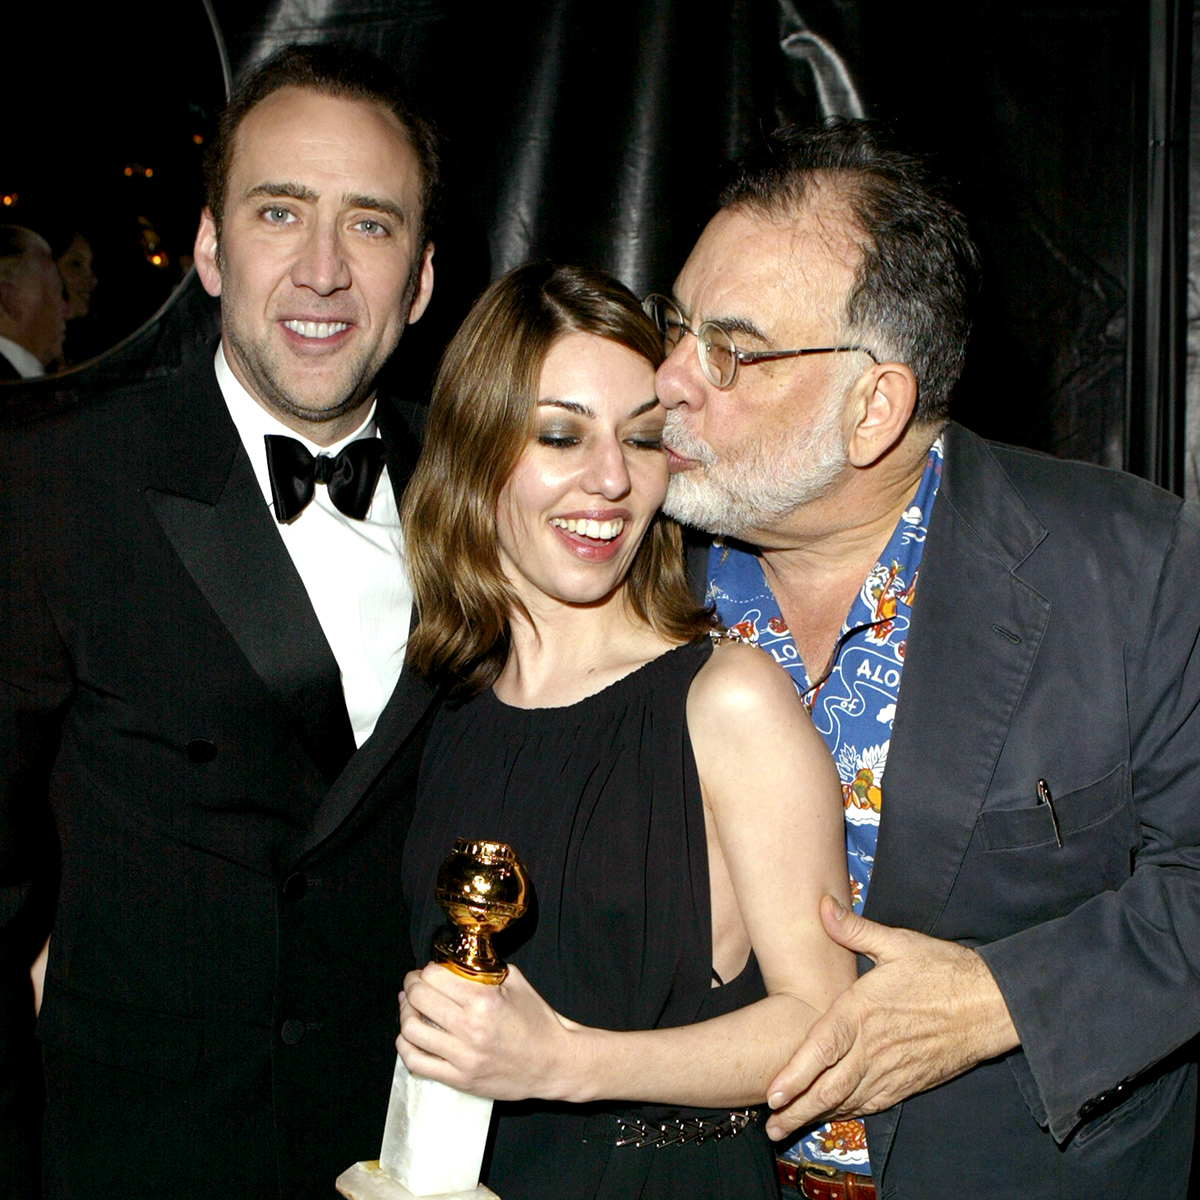 Sofia Coppola: The Godfather's Daughter